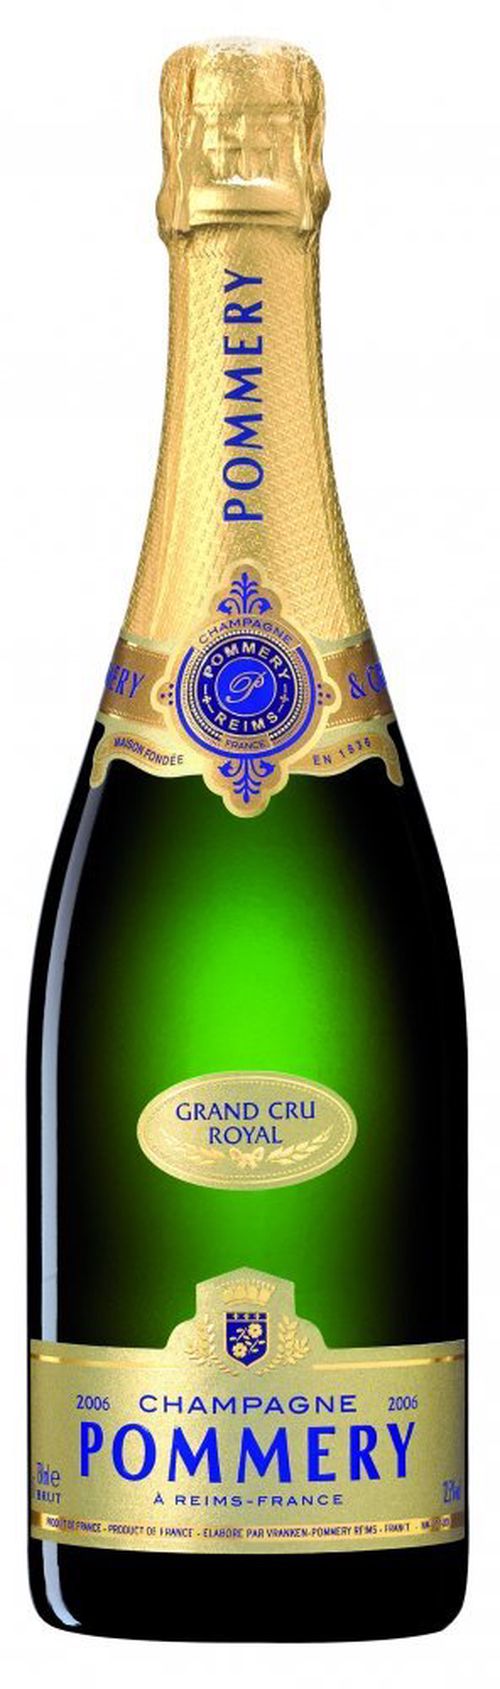 Pommery Champagne Gran Cru Royal Brut 2008 0,75l 12,5%